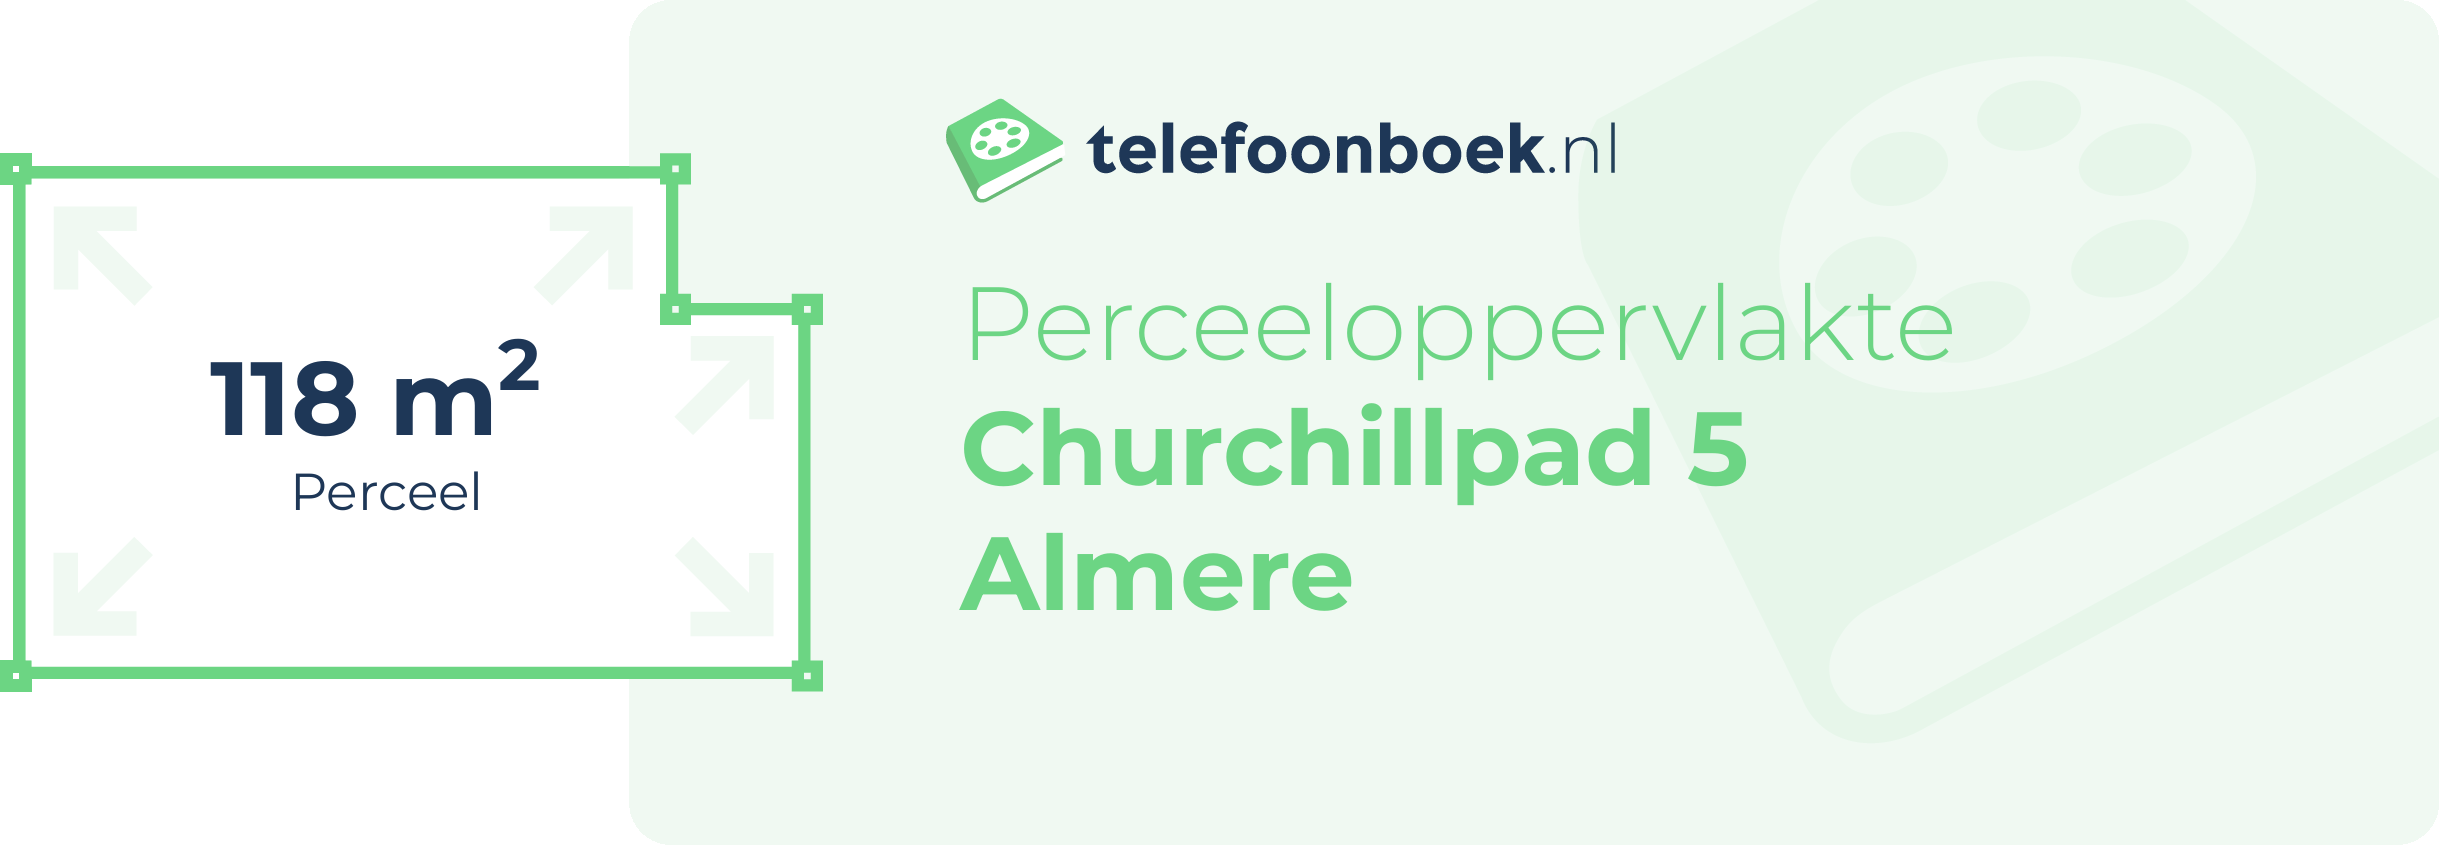 Perceeloppervlakte Churchillpad 5 Almere